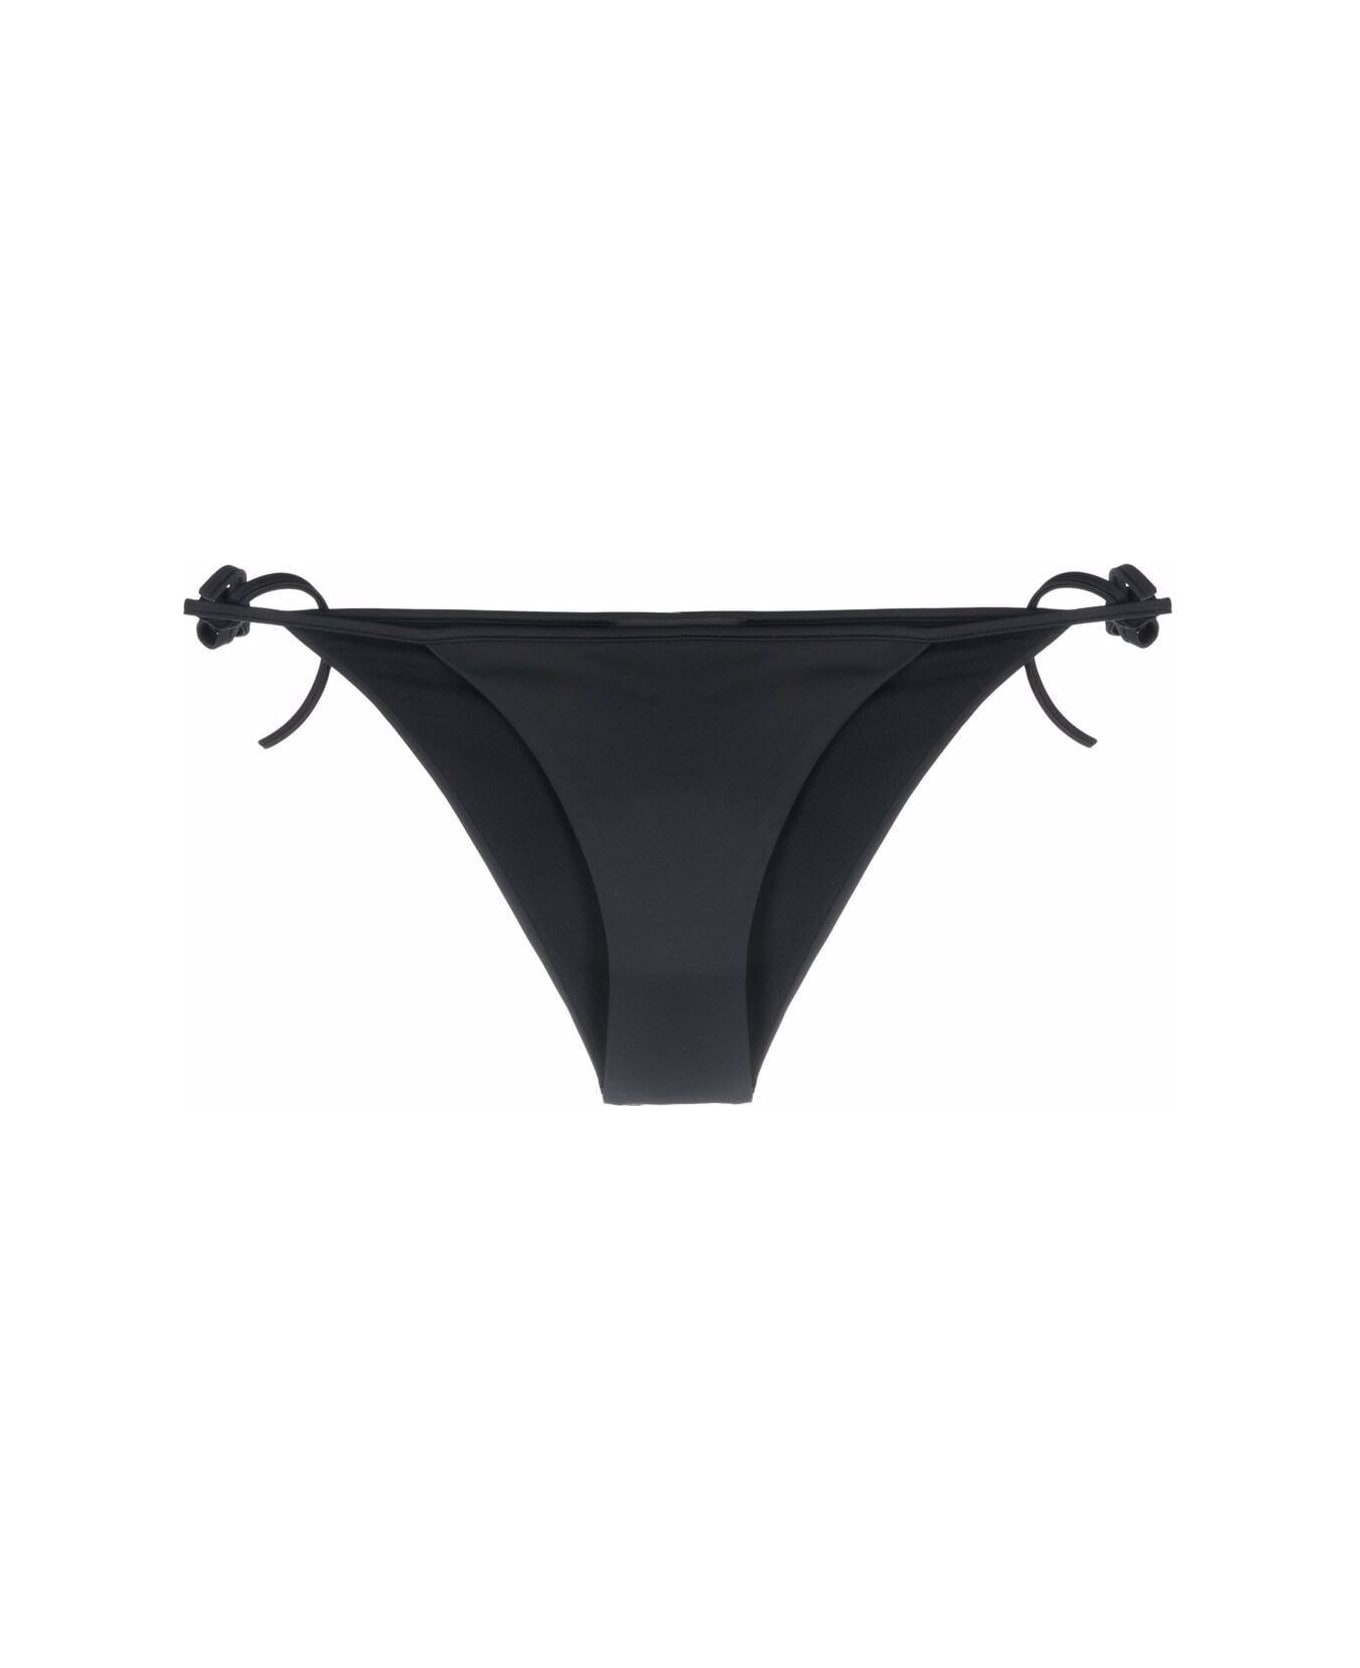 Dsquared2 D-squared2 Woman's Black Stretch Fabric Bikini Bottoms - Black